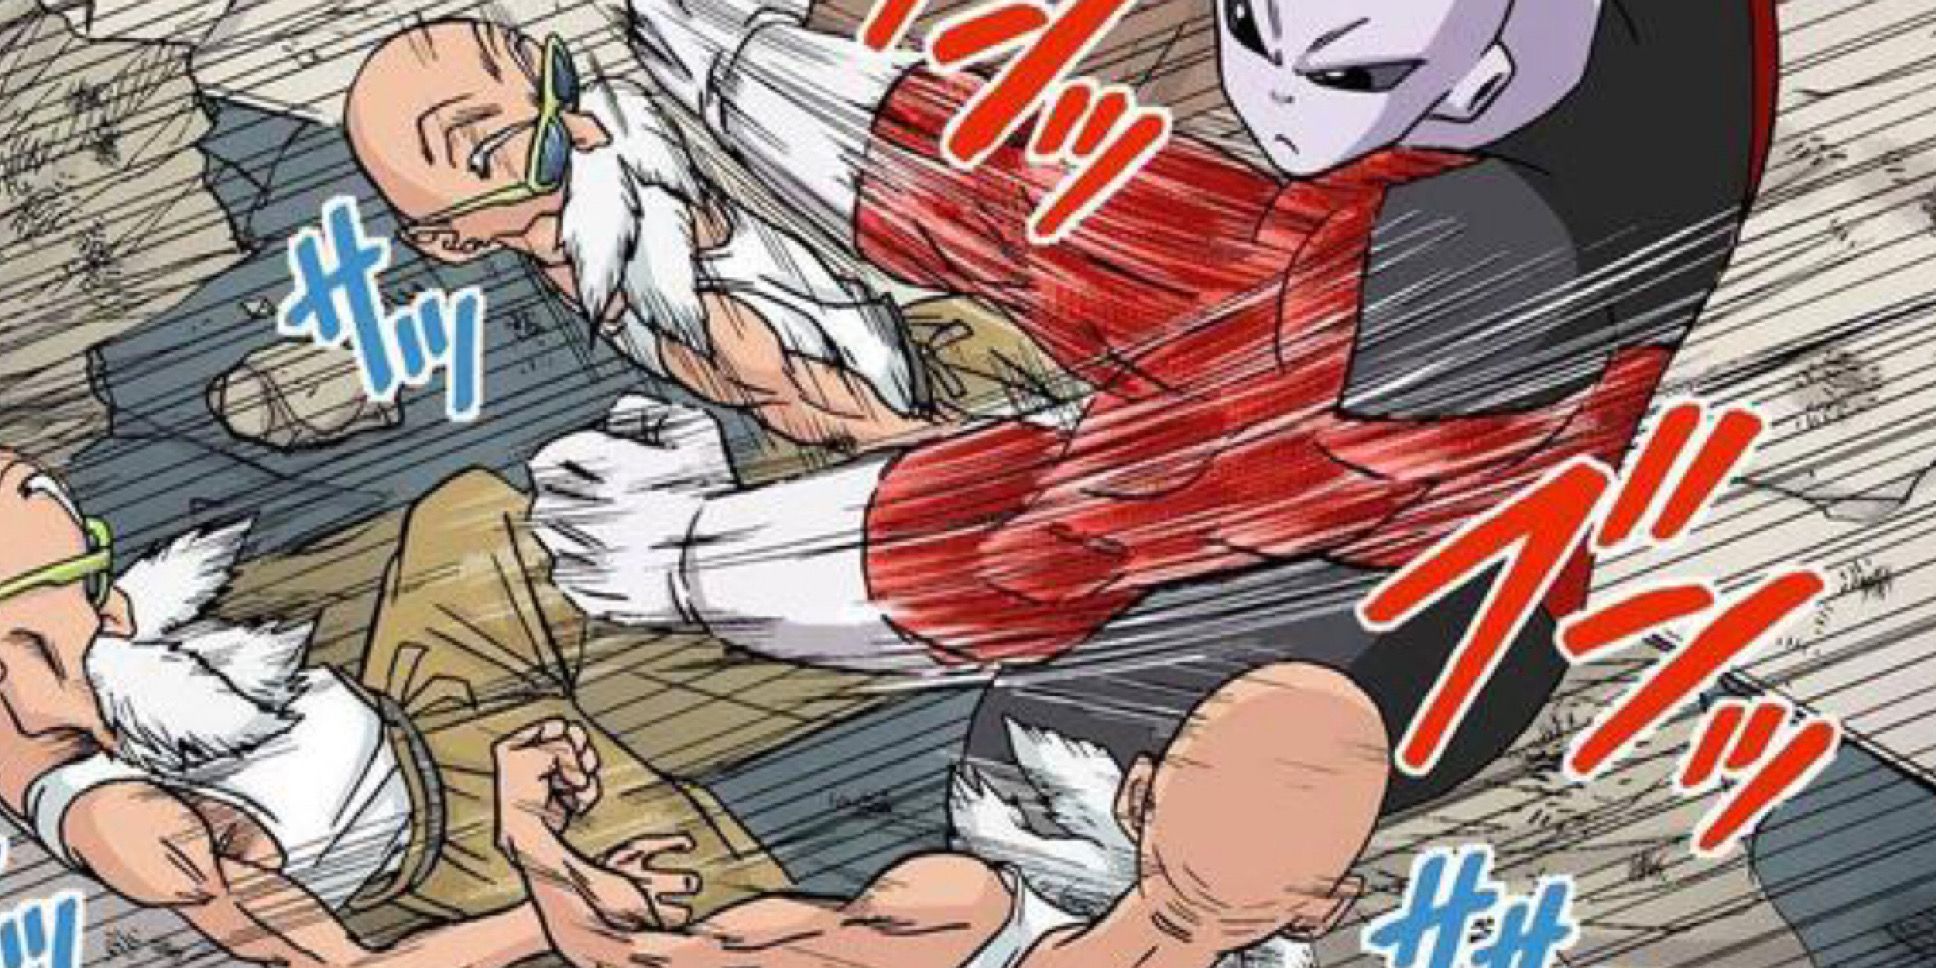 Master Roshi dodging Jiren in the Dragon Ball Super manga.